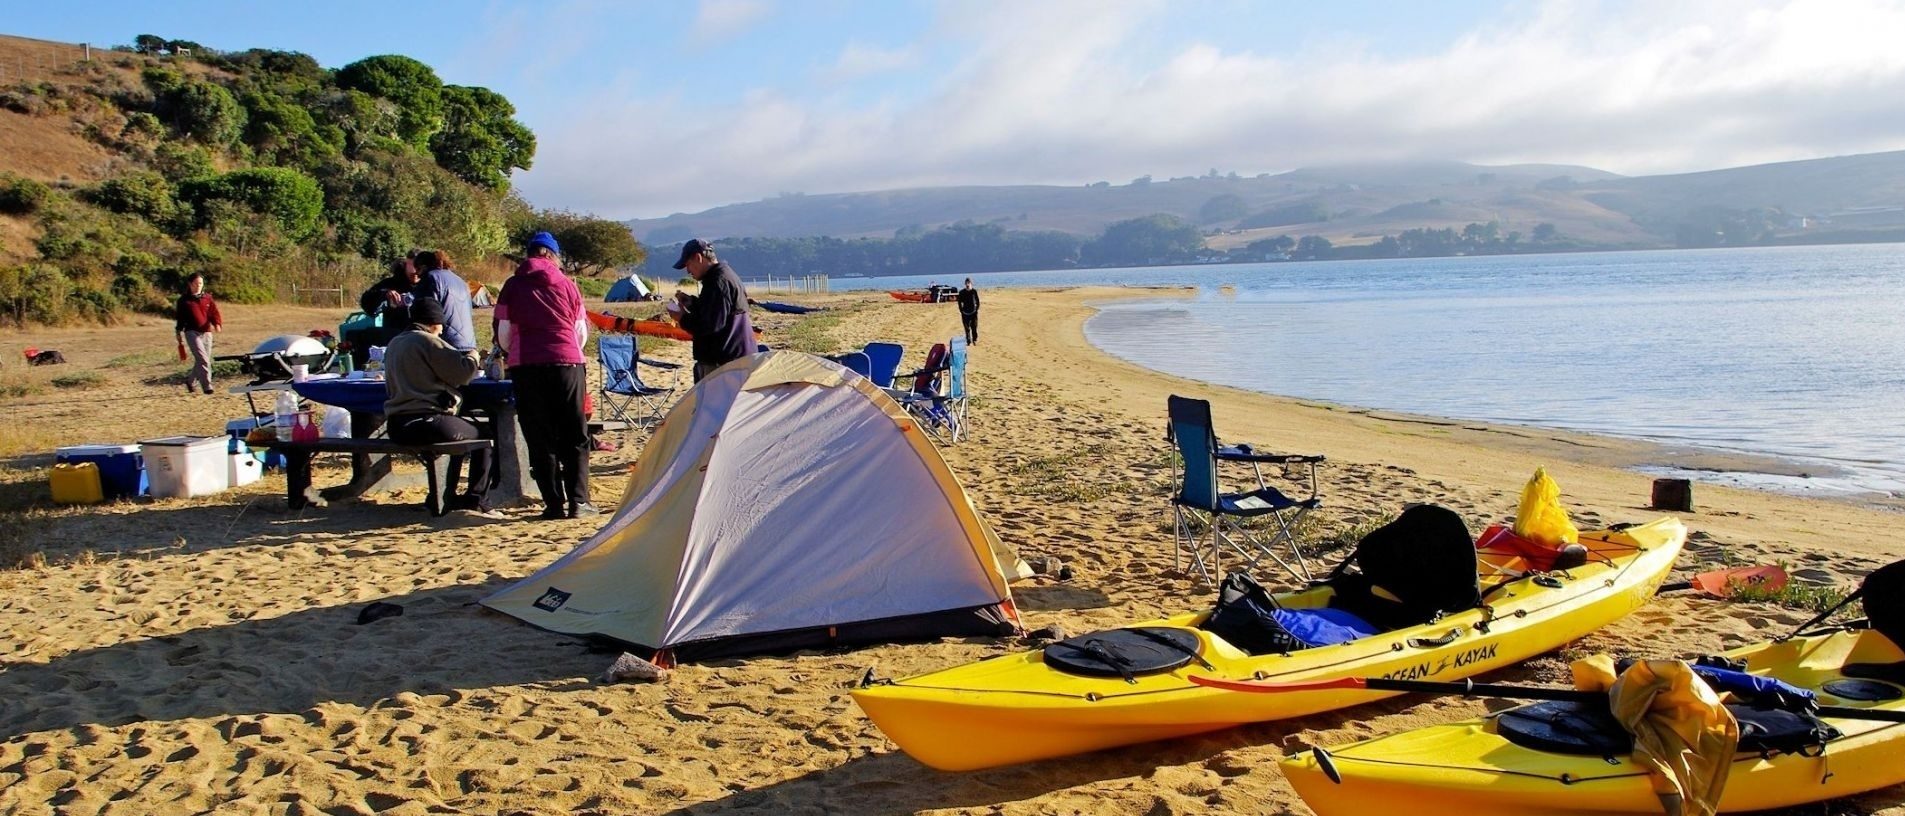 Camping permits on Tomales Bay & Lake Sonoma